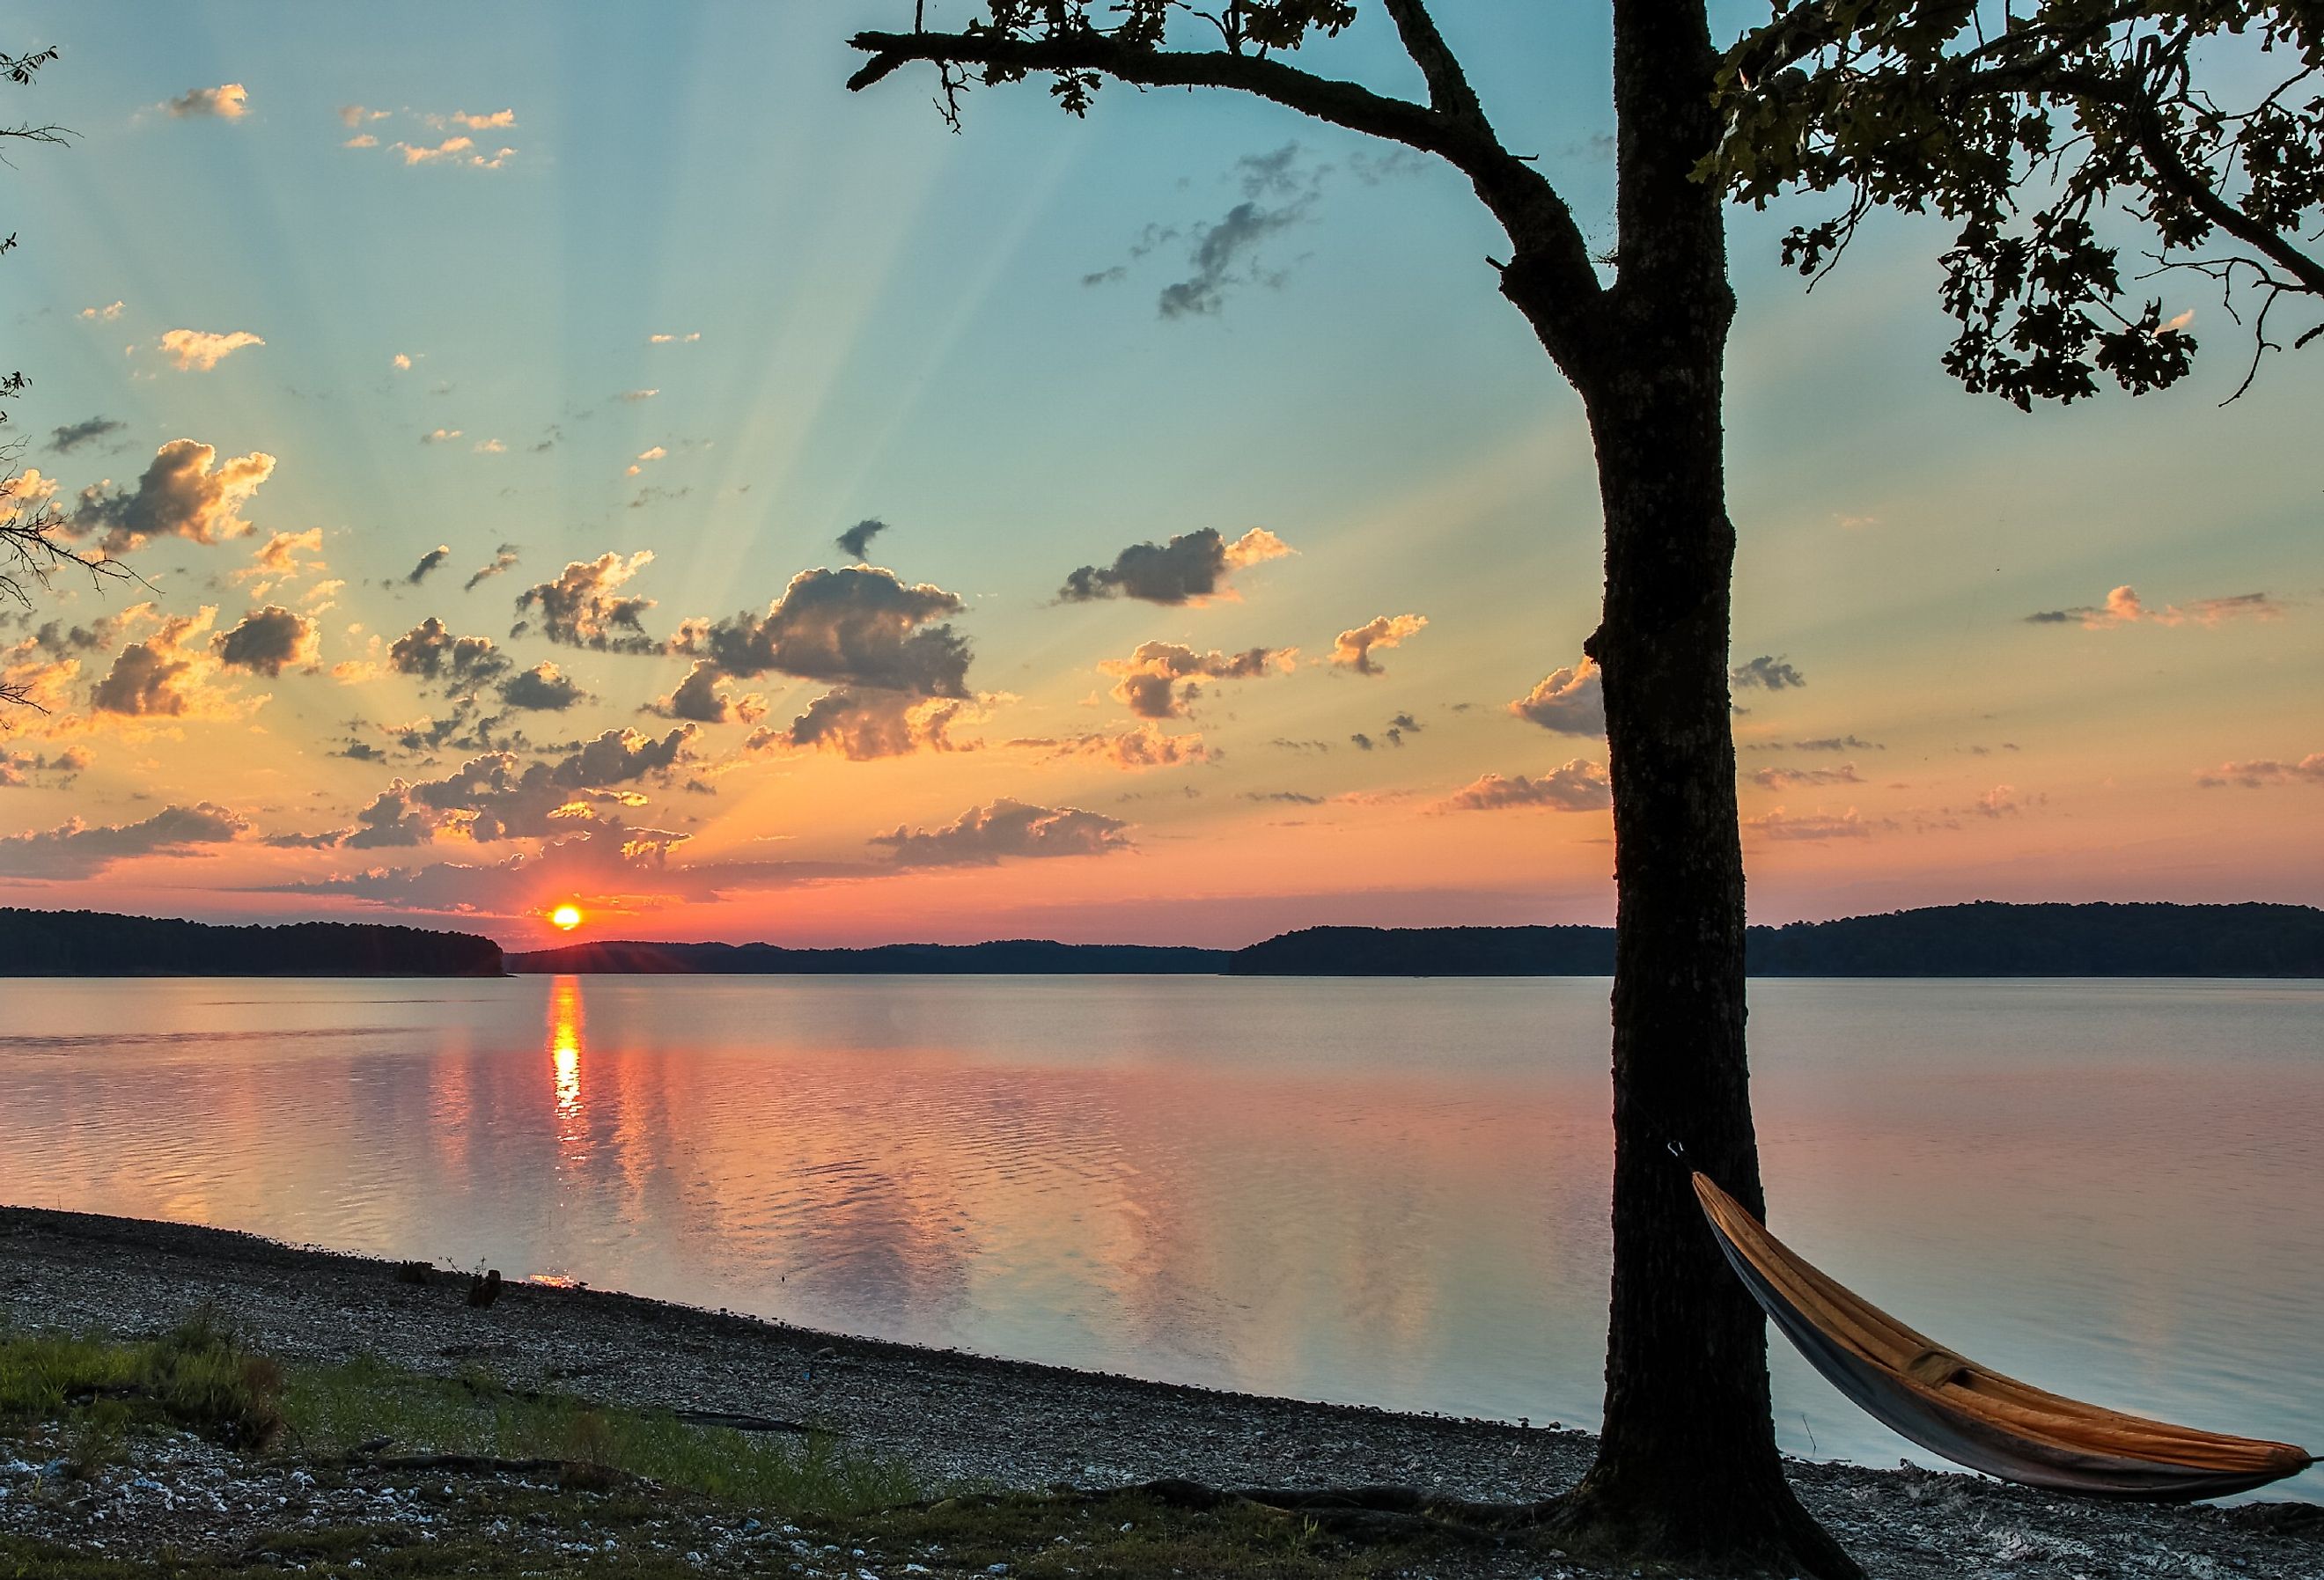 Hammock on rock beach looking over a beautiful sunrise at lake Ouachita, Arkansas.